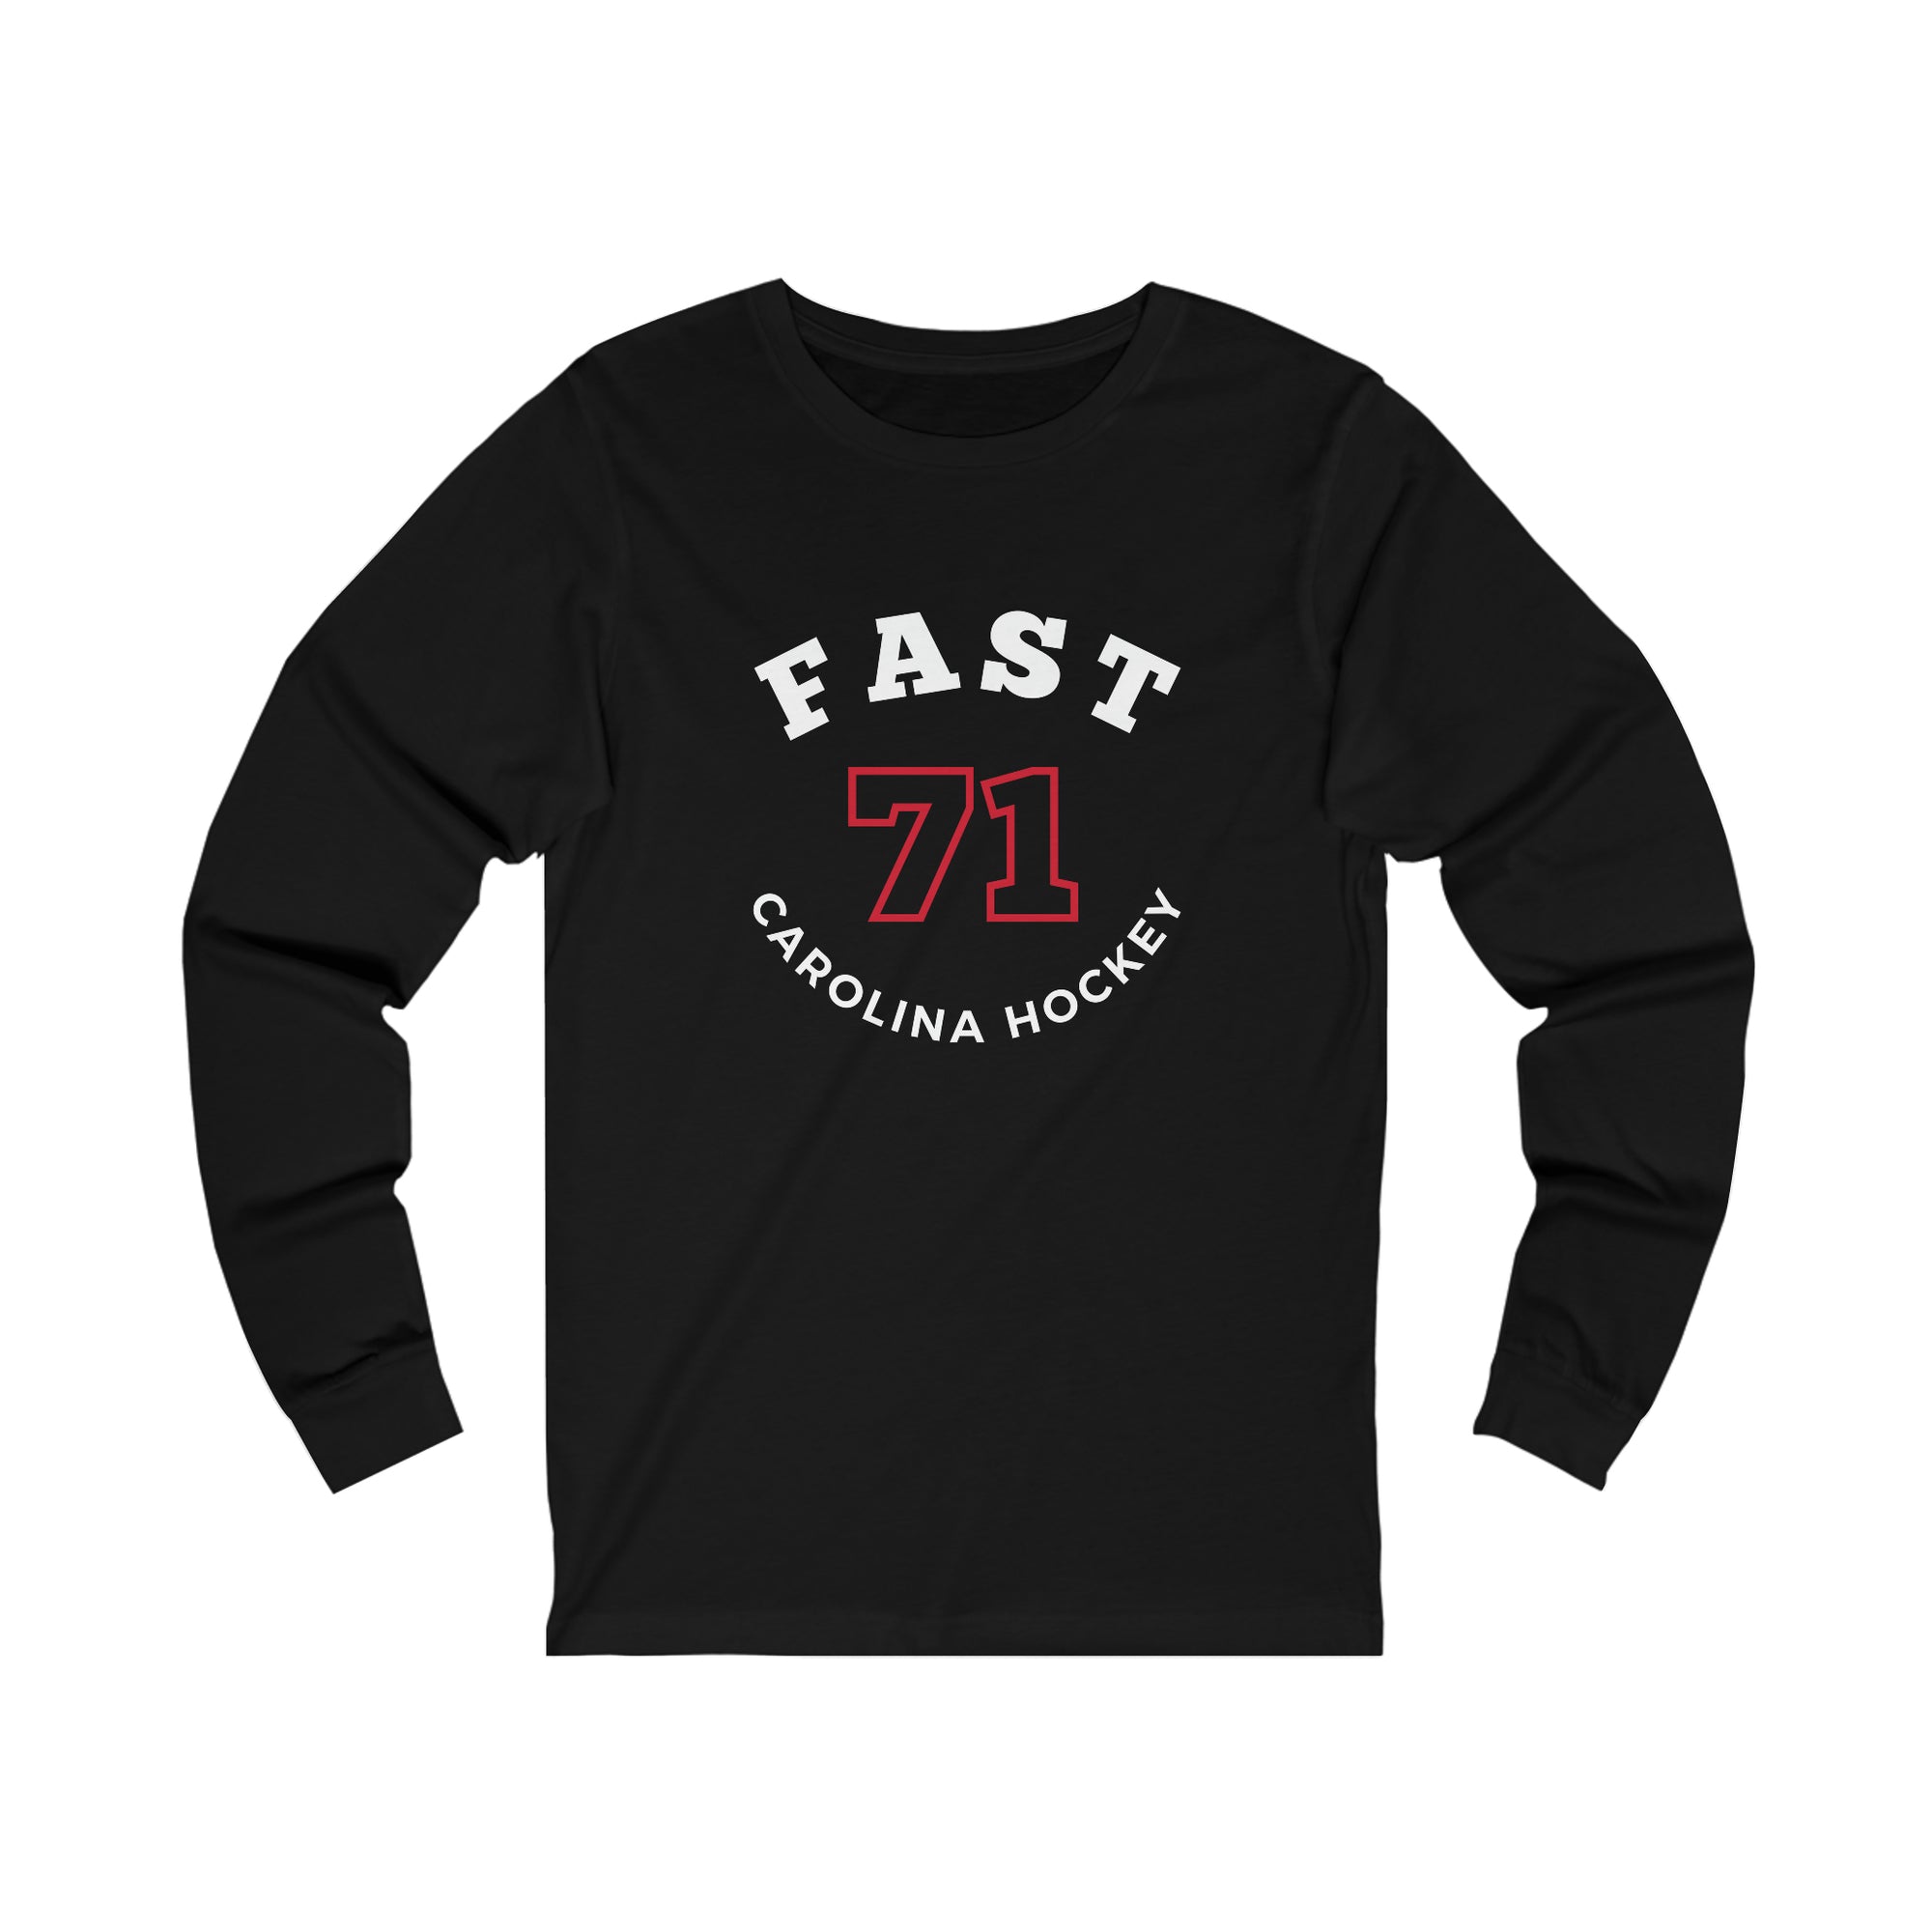 Fast 71 Carolina Hockey Number Arch Design Unisex Jersey Long Sleeve Shirt